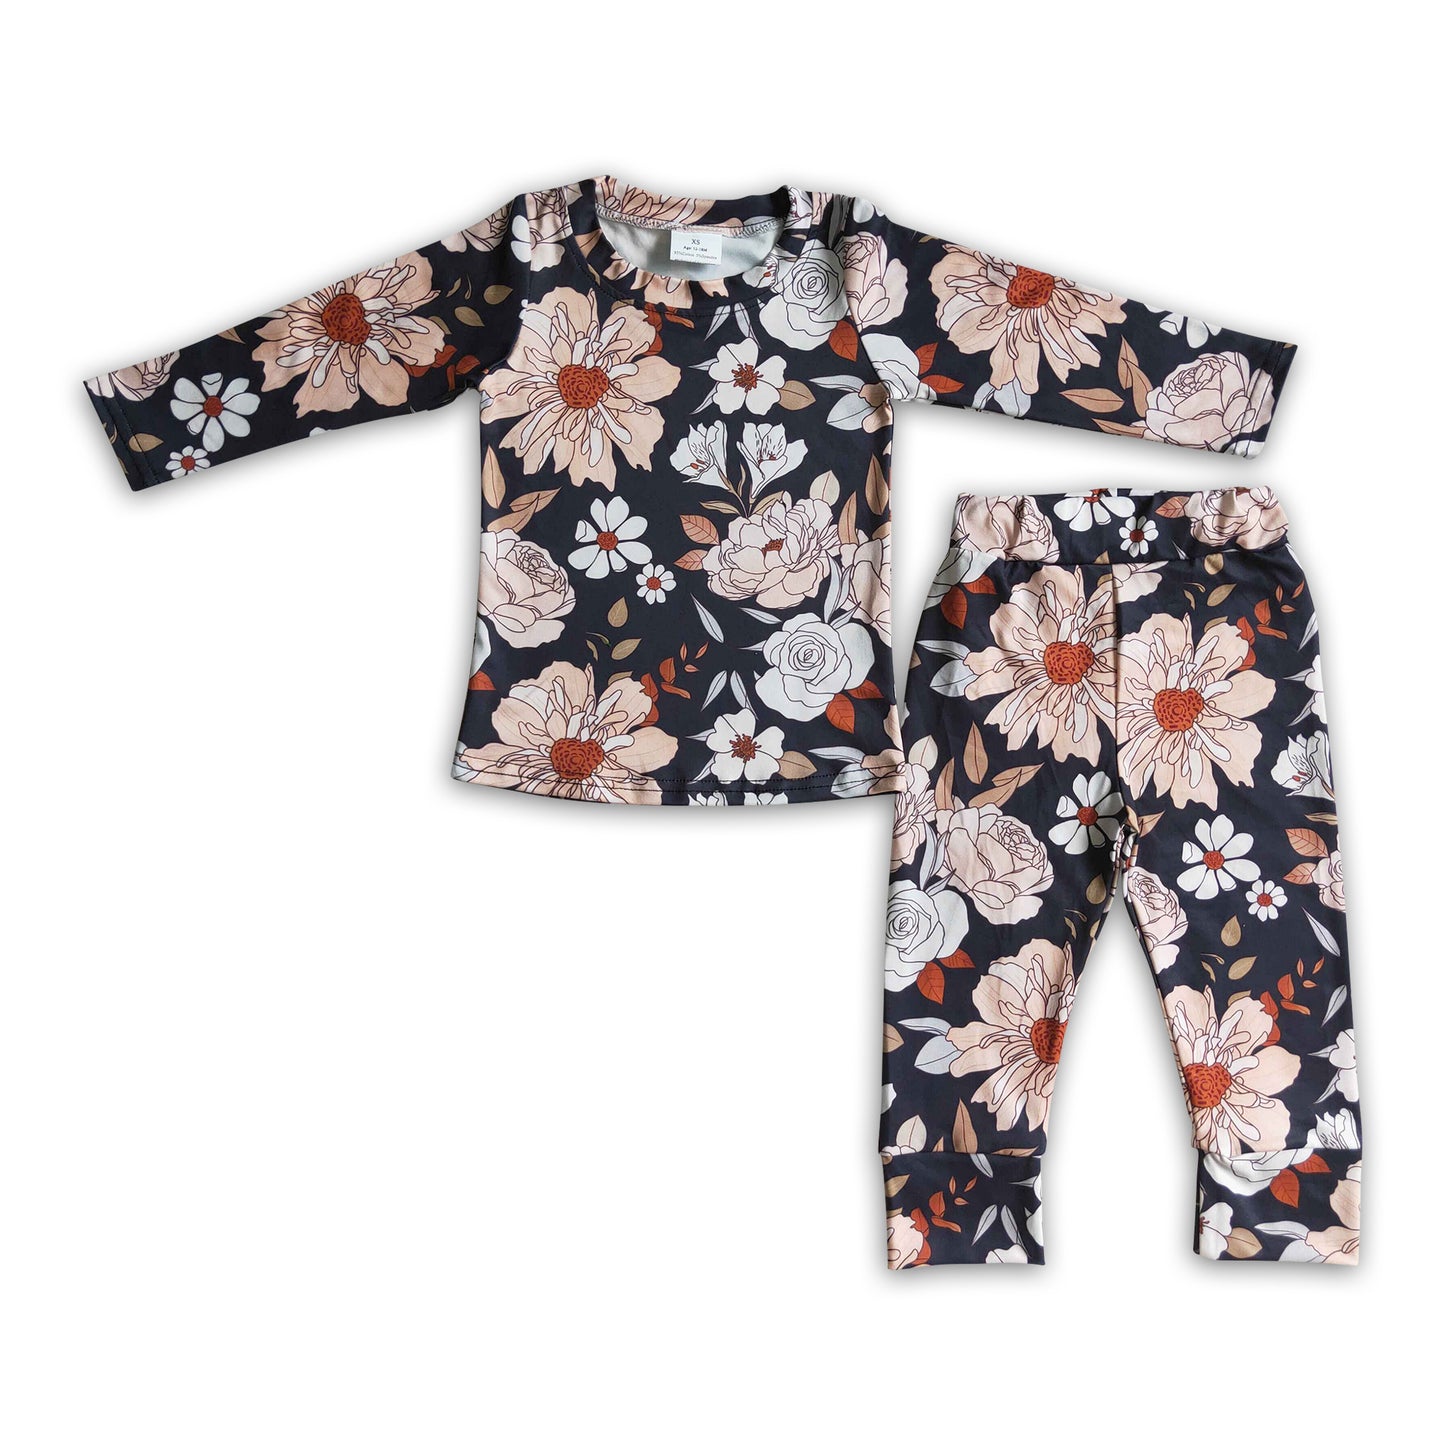 Black floral long sleeve girls fall pajamas